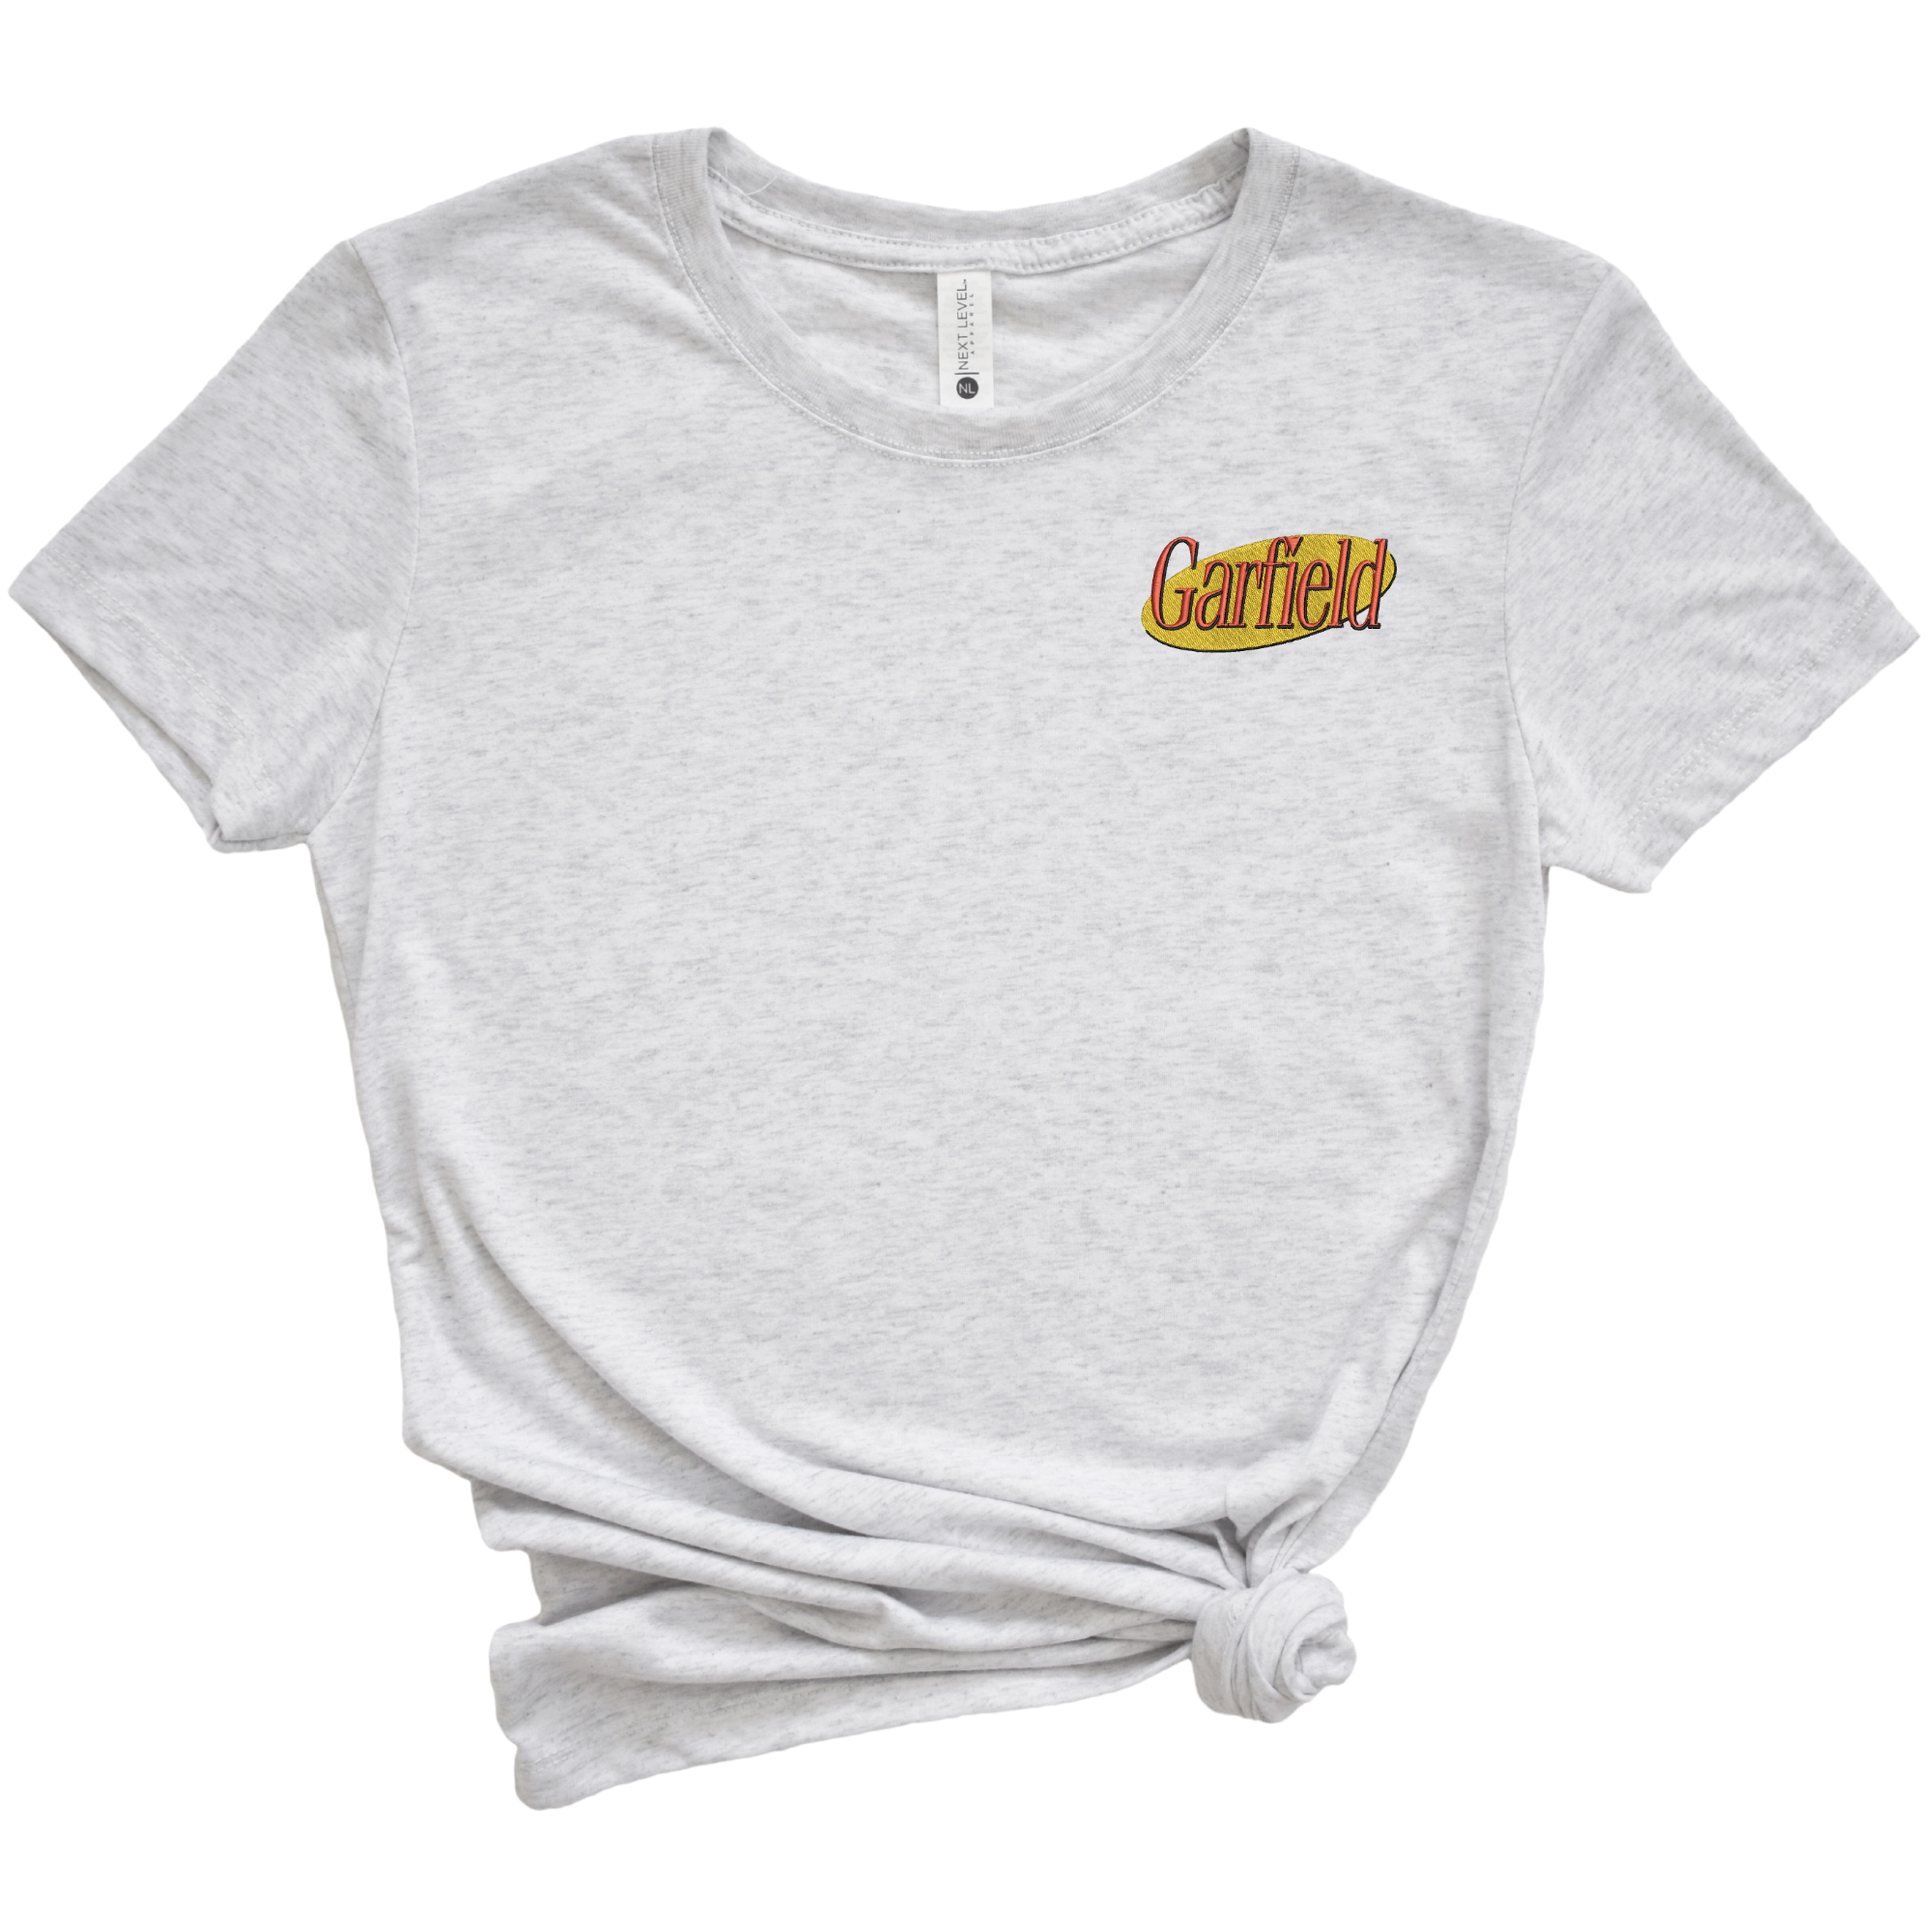 Garfield Seinfeld Crossover Episode Embroidered Tee Shirt, Unisex